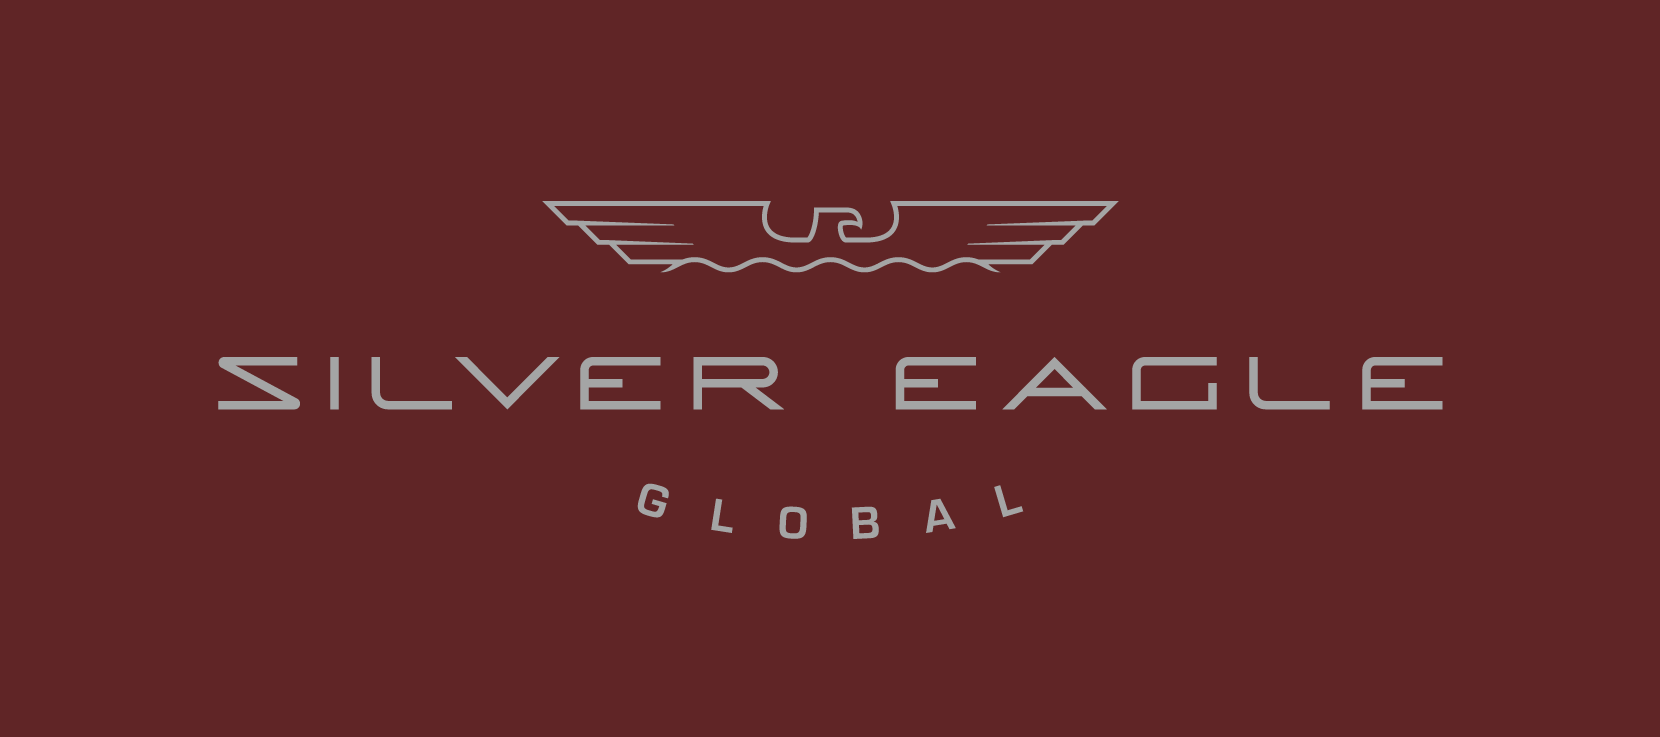 Silver Eagle Logo - Silver Eagle Website and logo | Tribu Digital Marketing Advertising ...